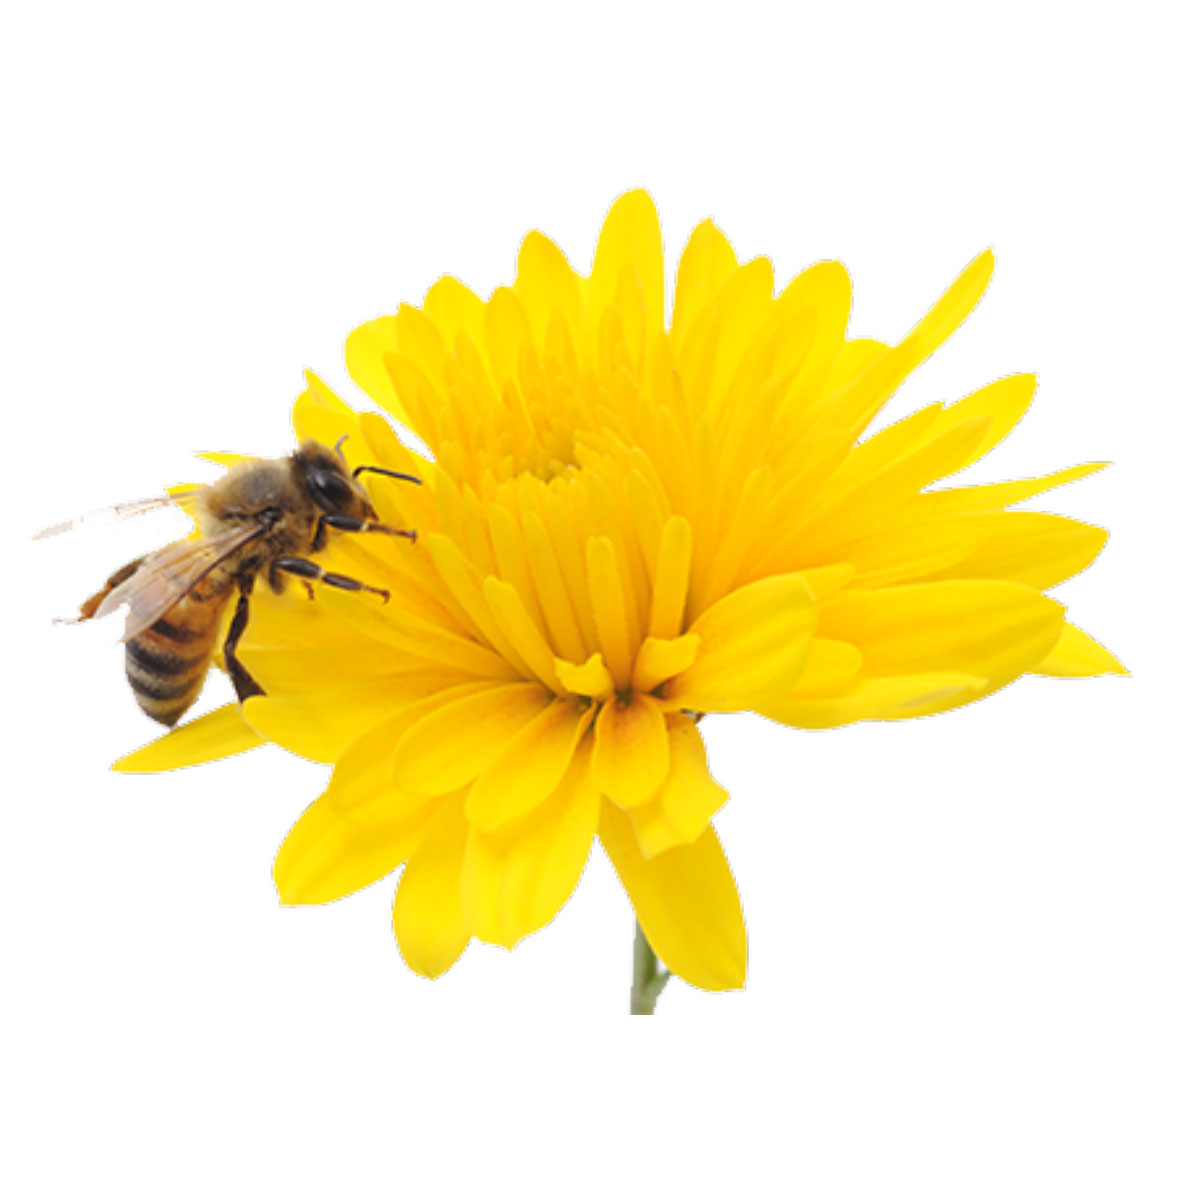 Honey bee landing on a yellow flower